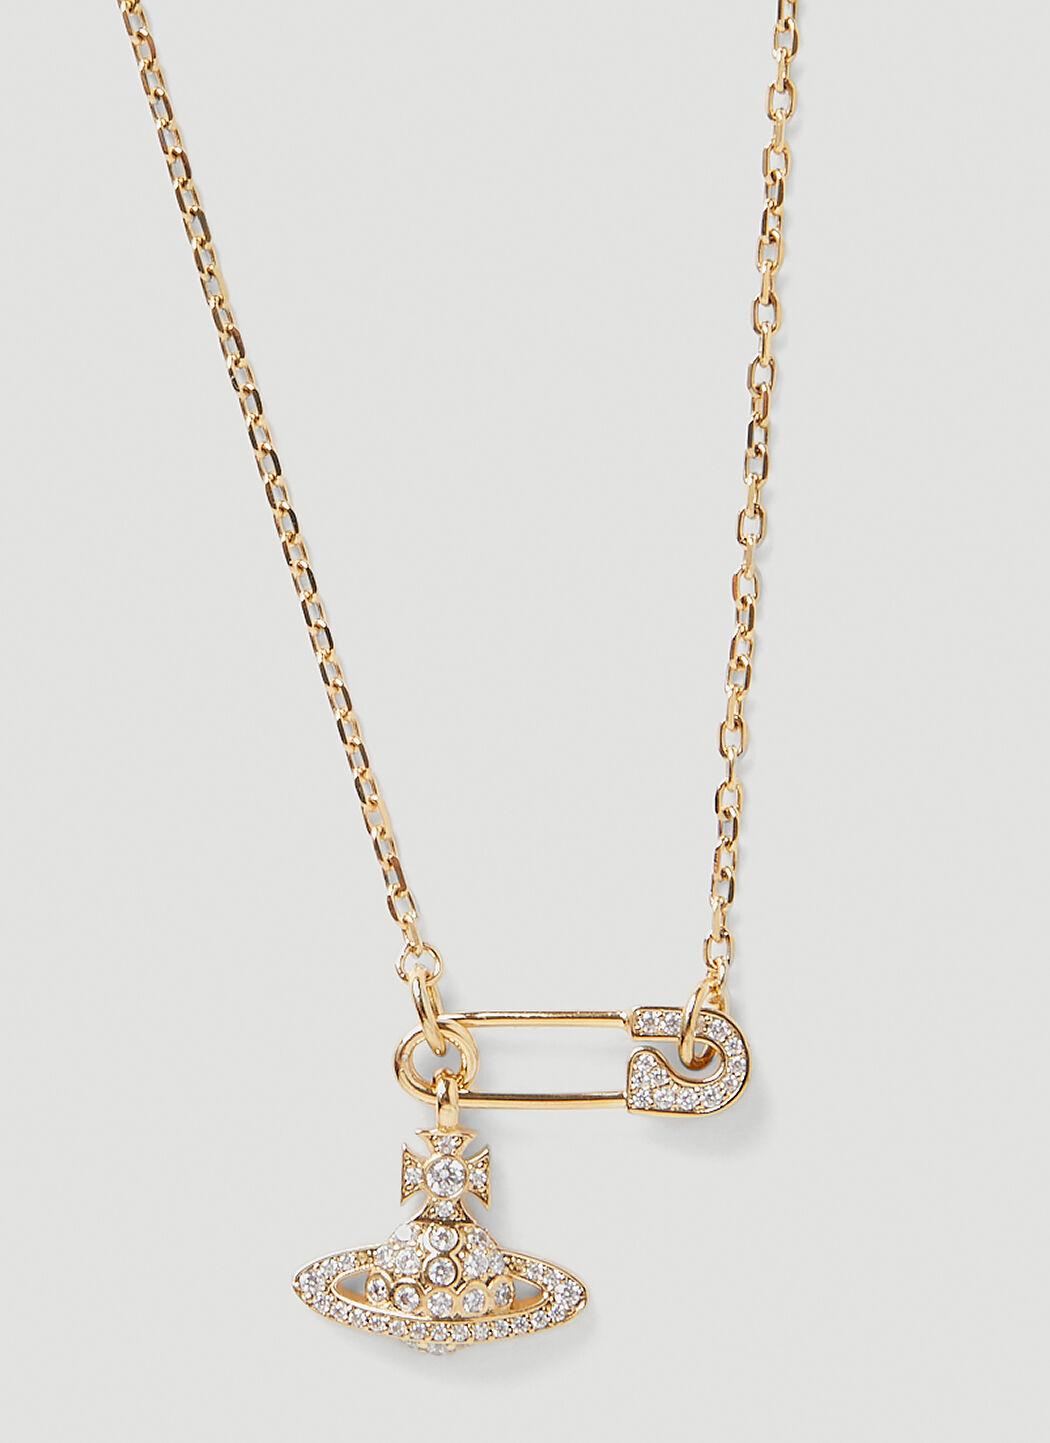 Vivienne Westwood Lucrece Pendant Necklace in Gold (Metallic) - Lyst